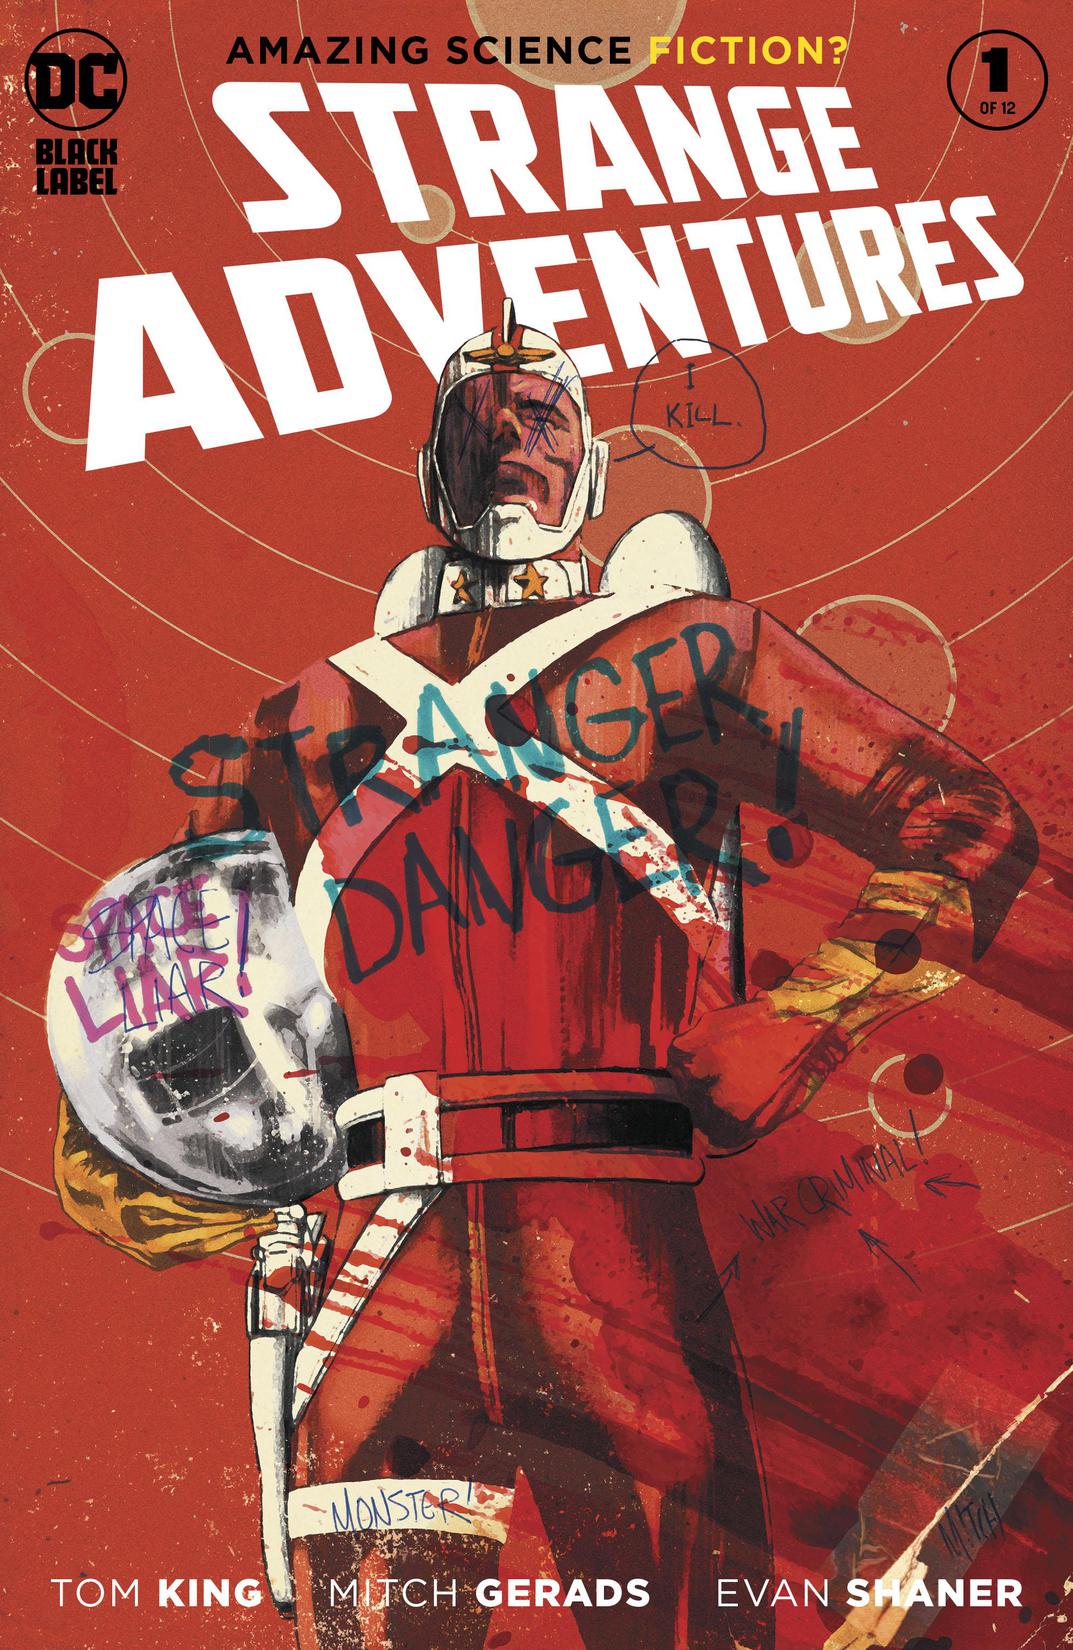 Strange Adventures (2020-) #1 preview images